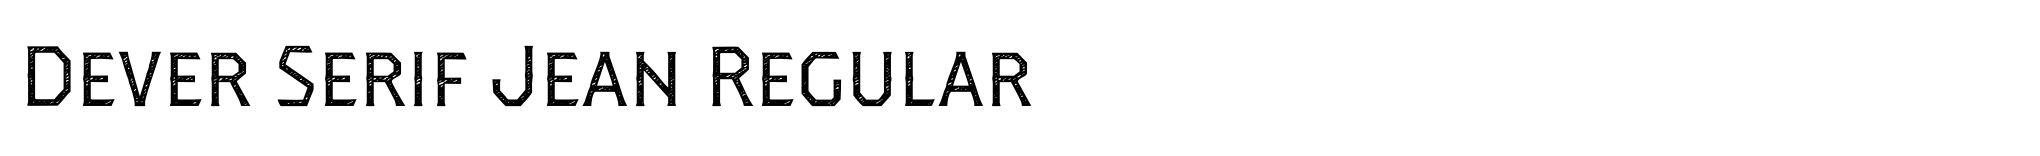 Dever Serif Jean Regular image